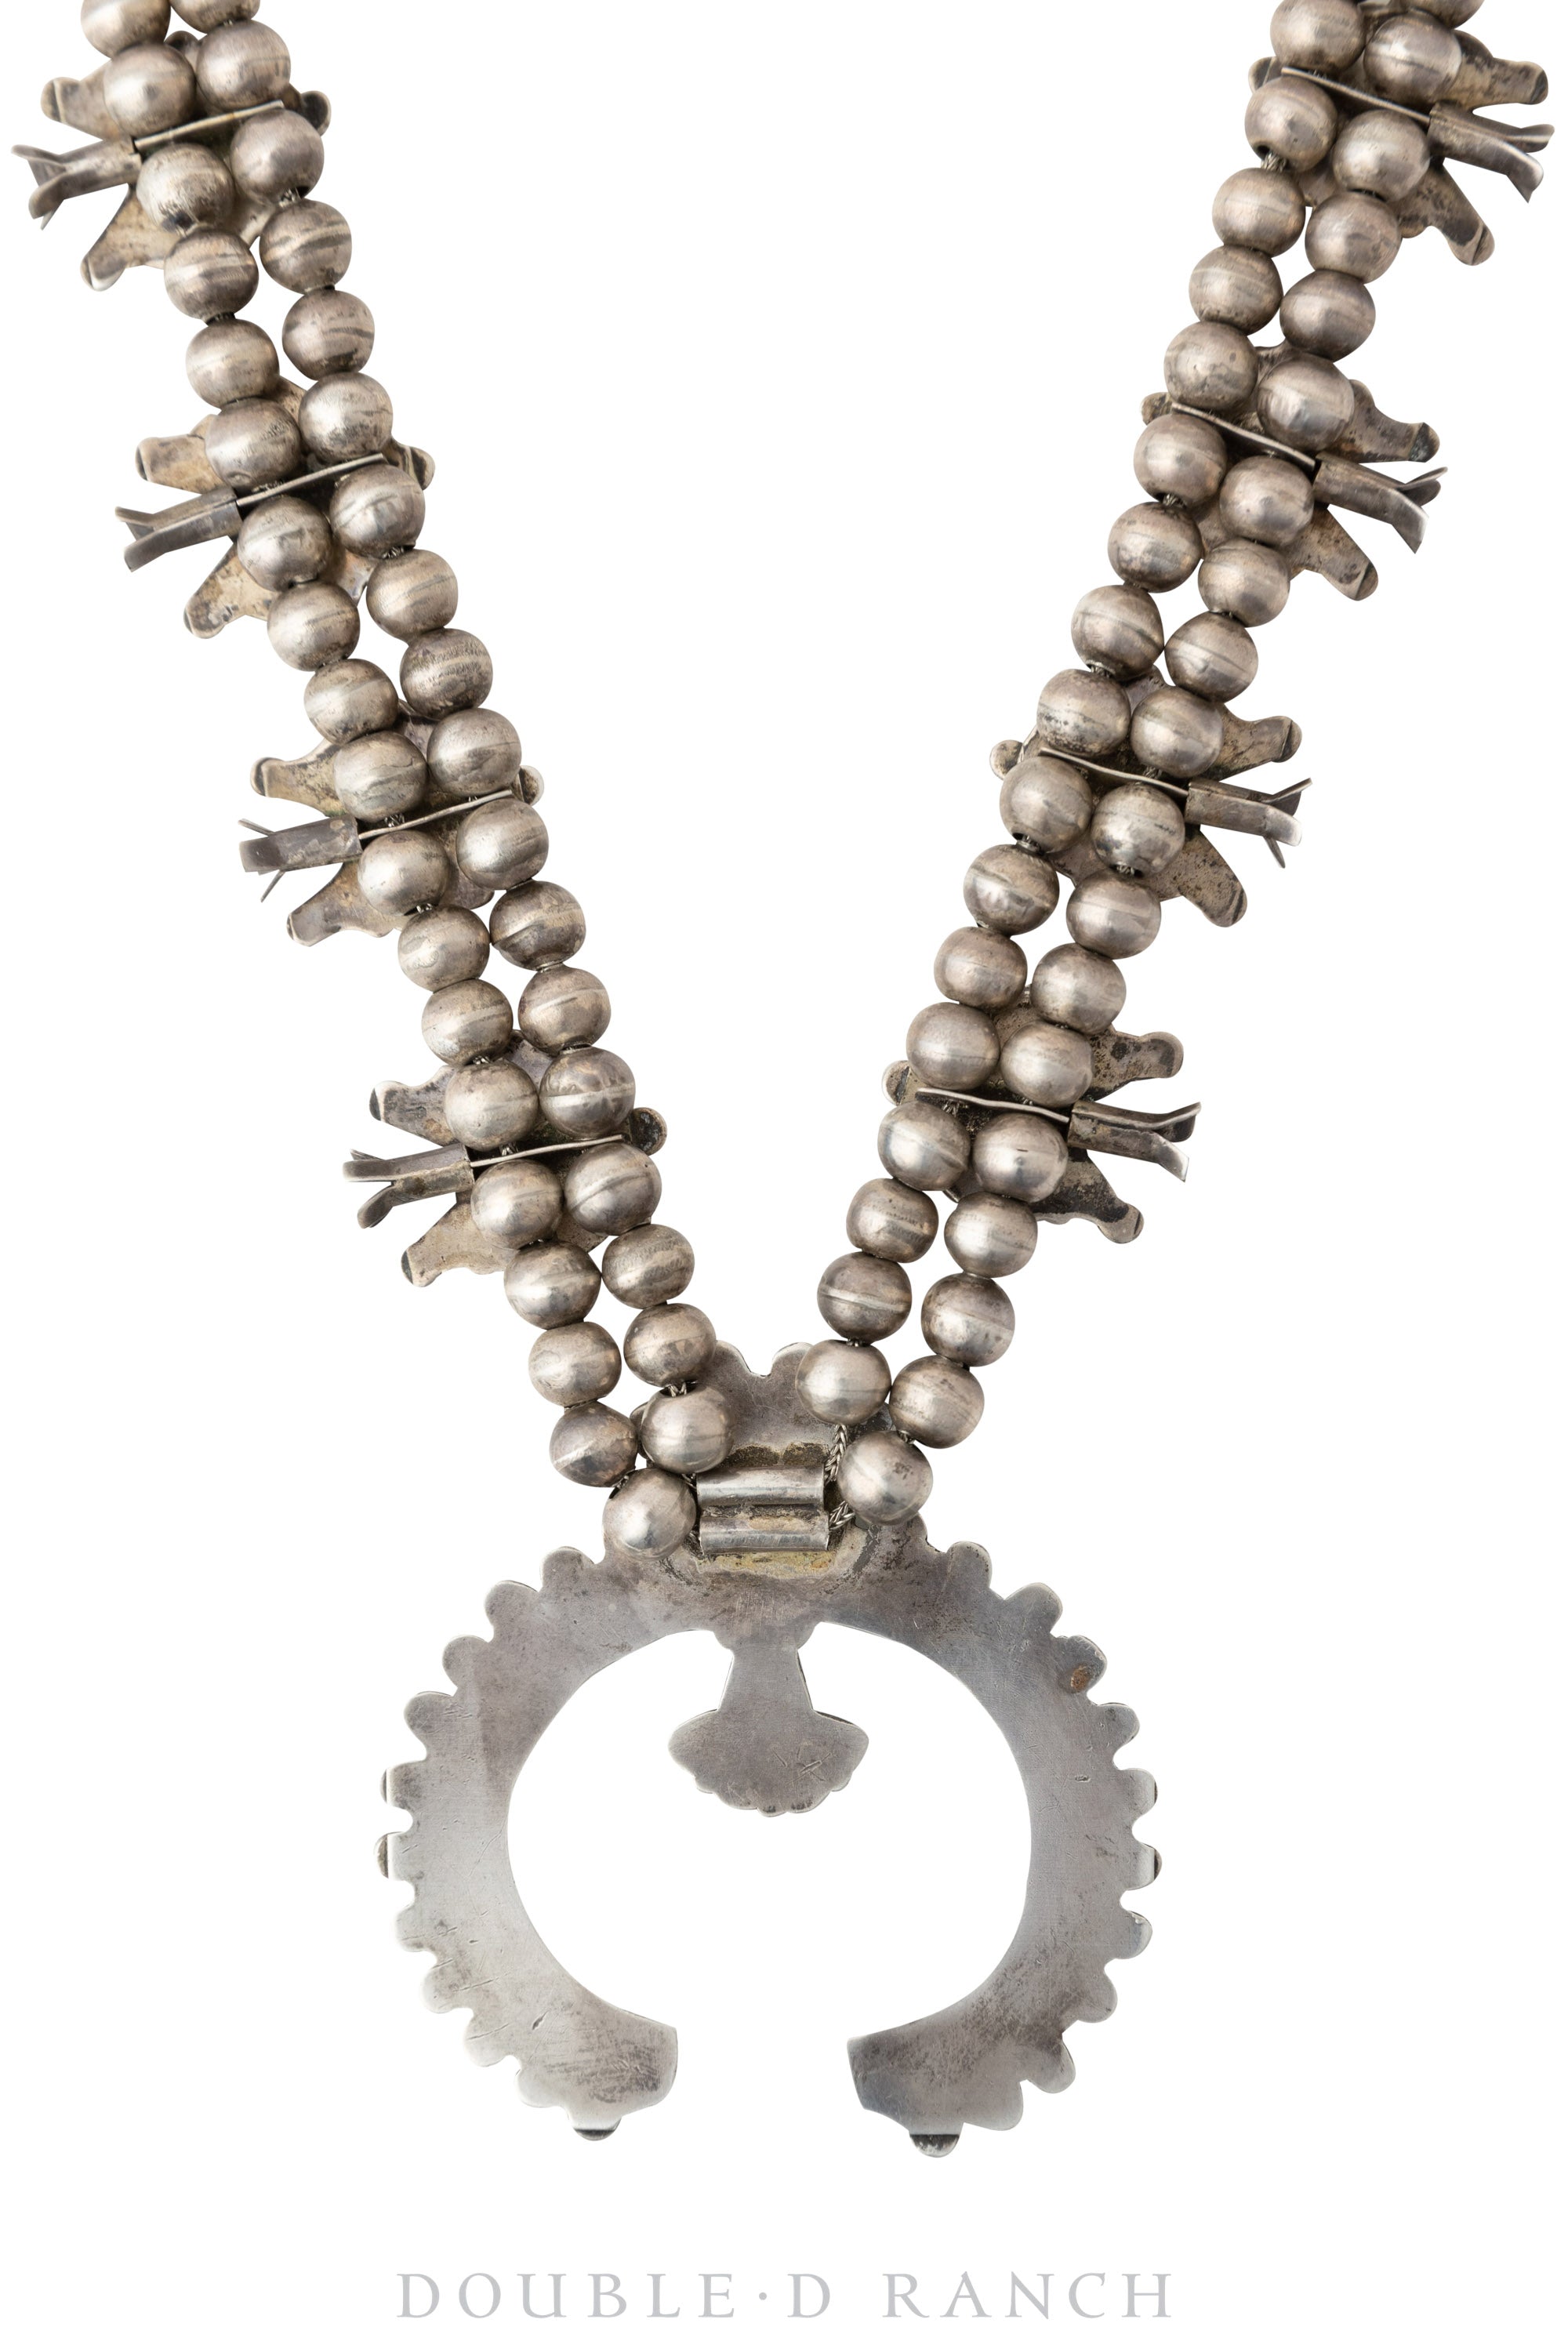 Sold at Auction: Vintage Squash Blossom Necklace